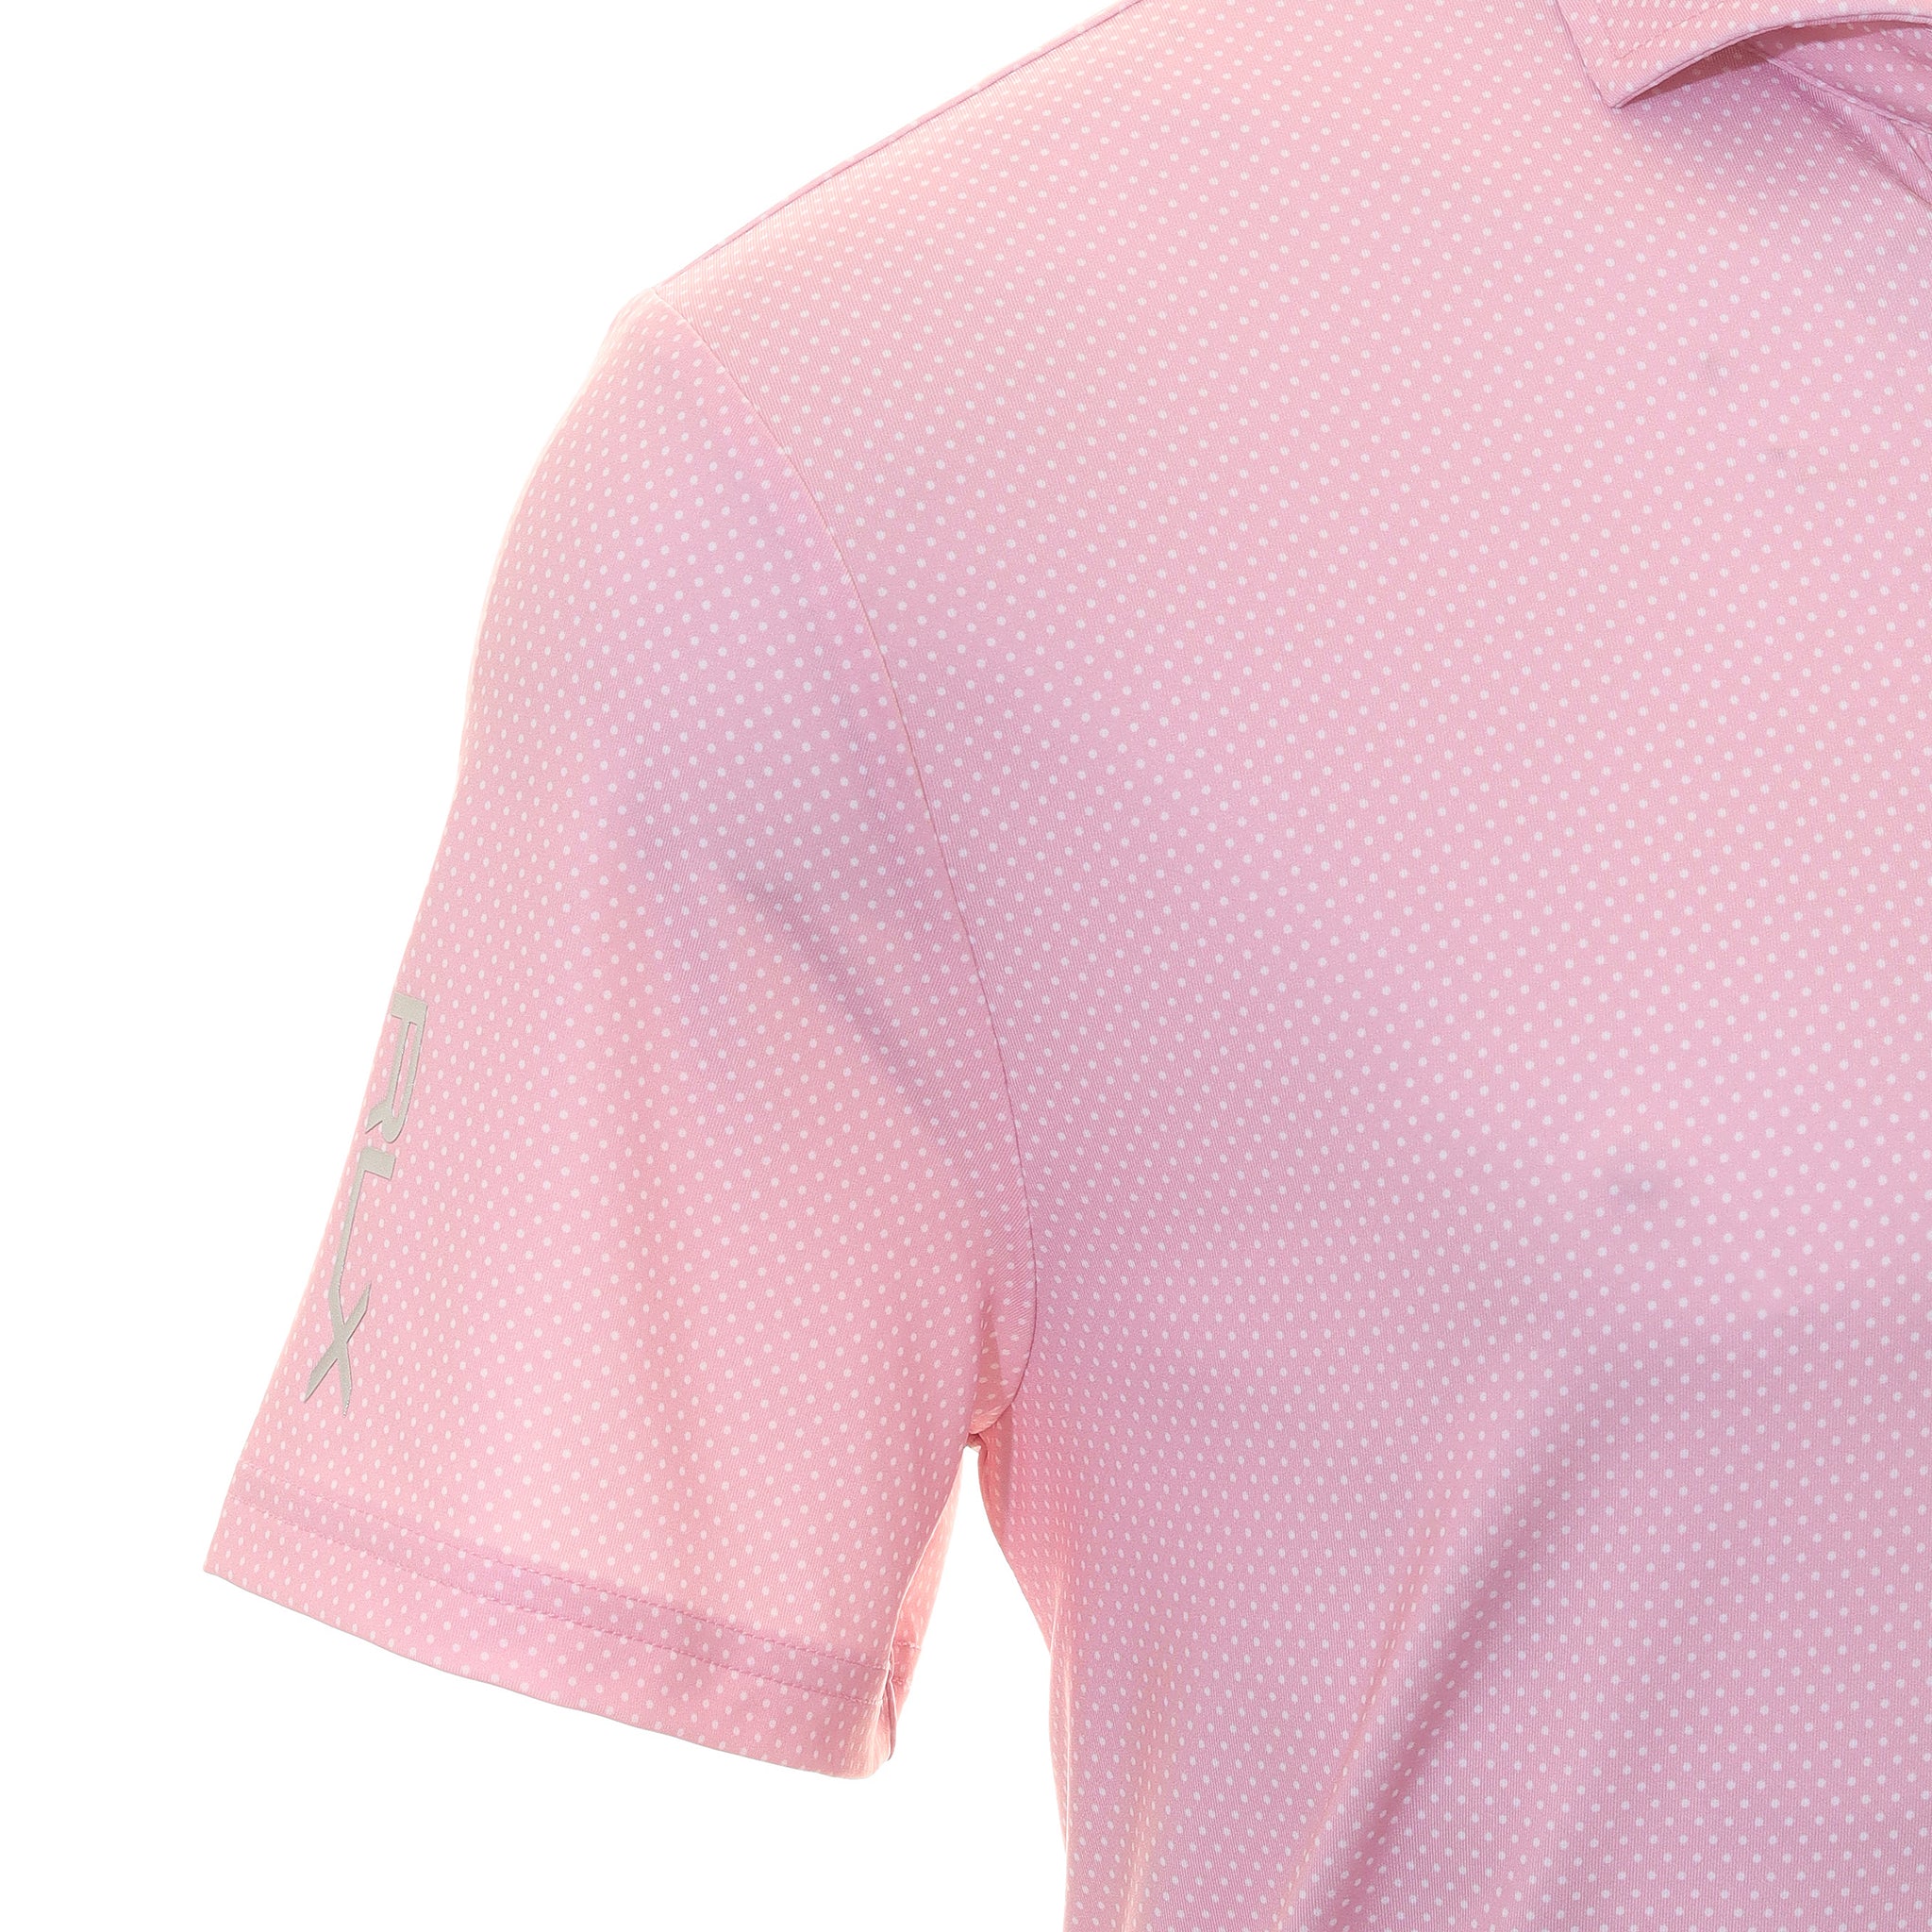 rlx-ralph-lauren-graphic-print-polo-shirt-785918204-pink-flamingo-pin-dot-002